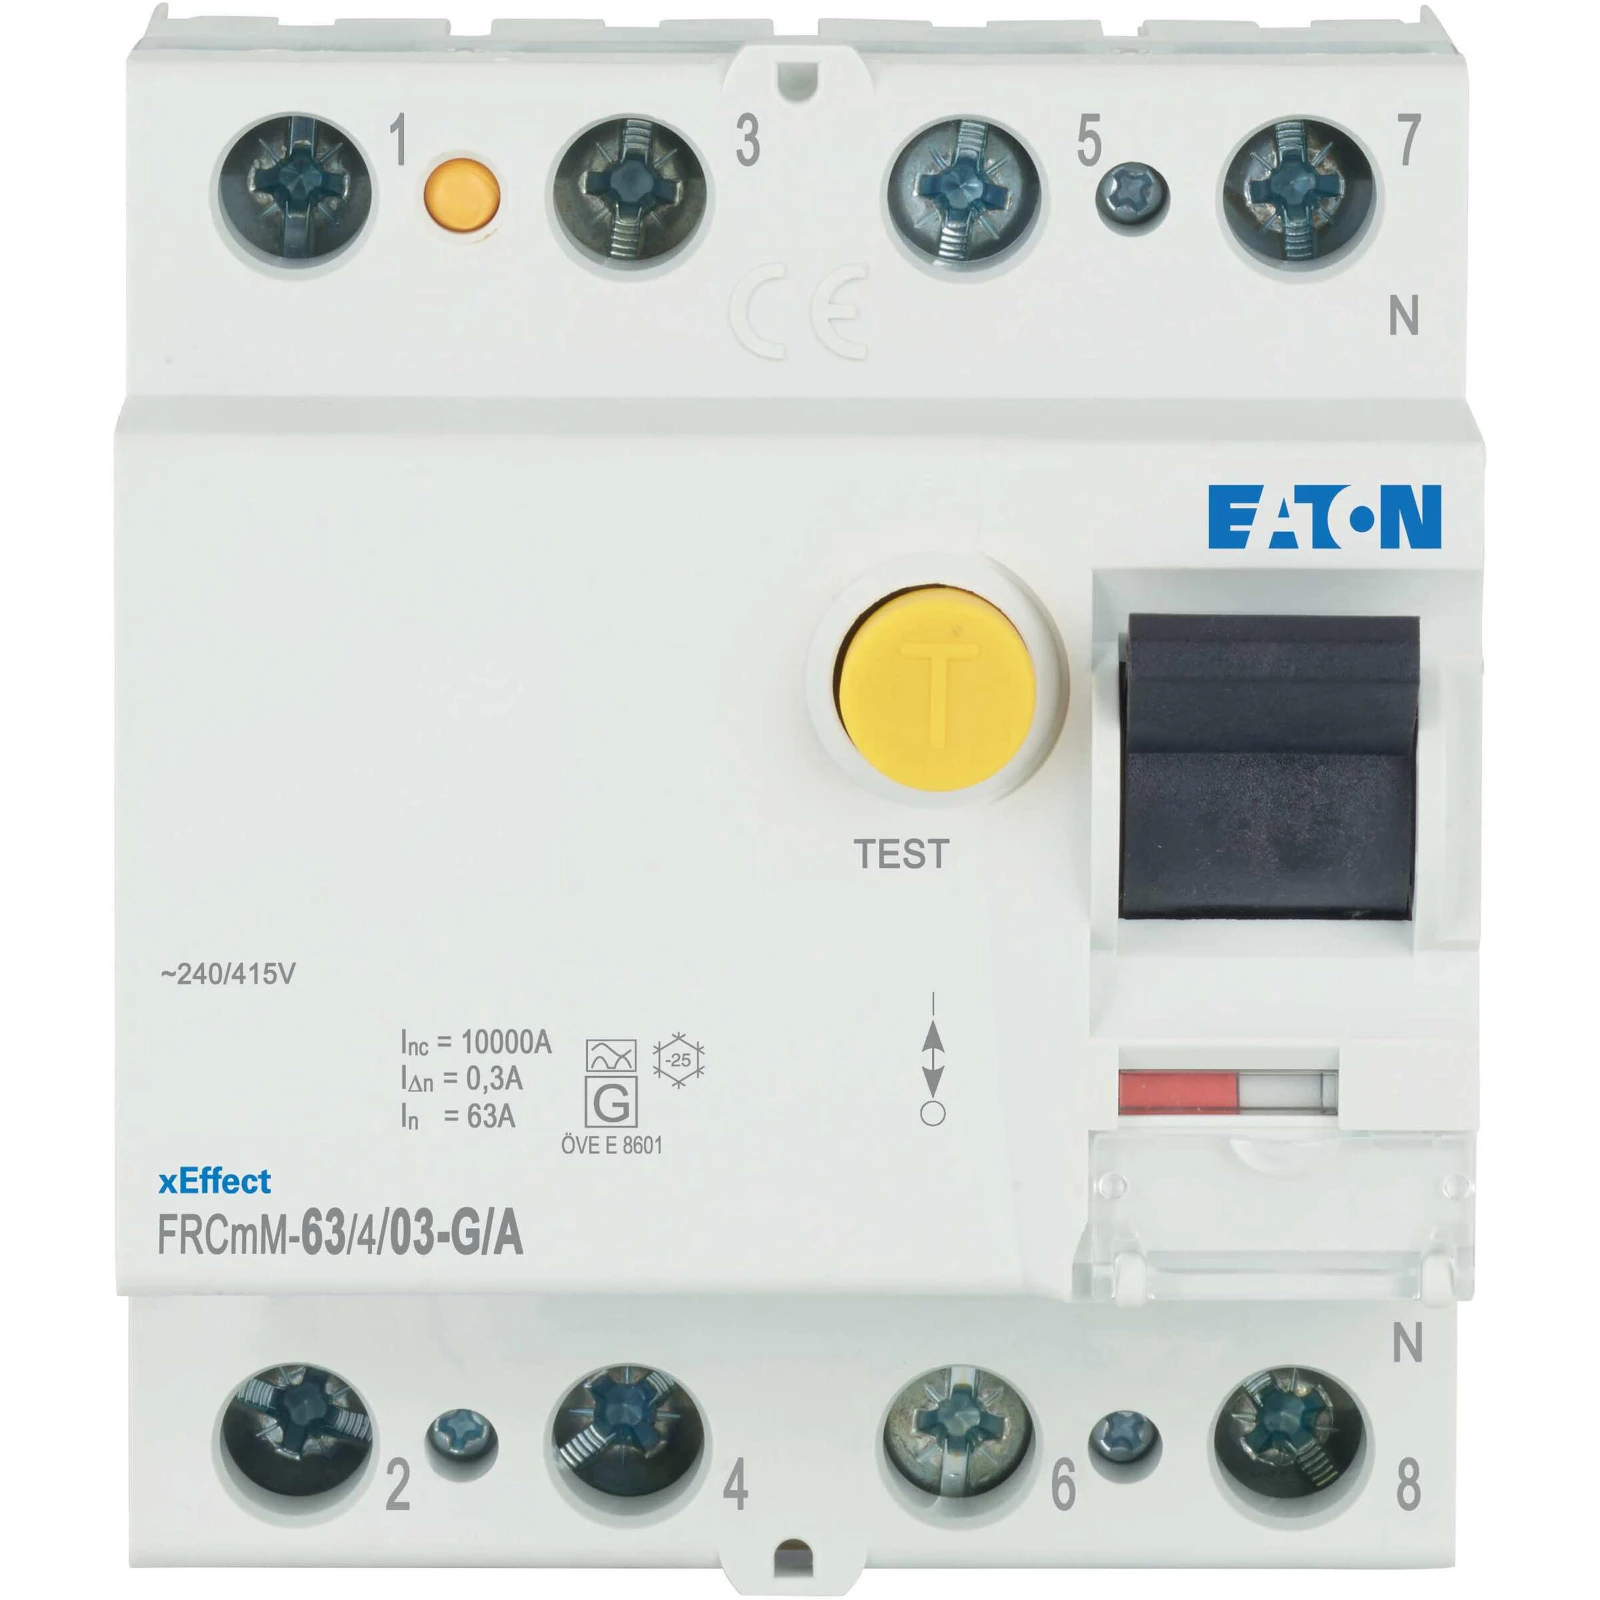 1201535 - Eaton FRCMM-63/4/03-G/A